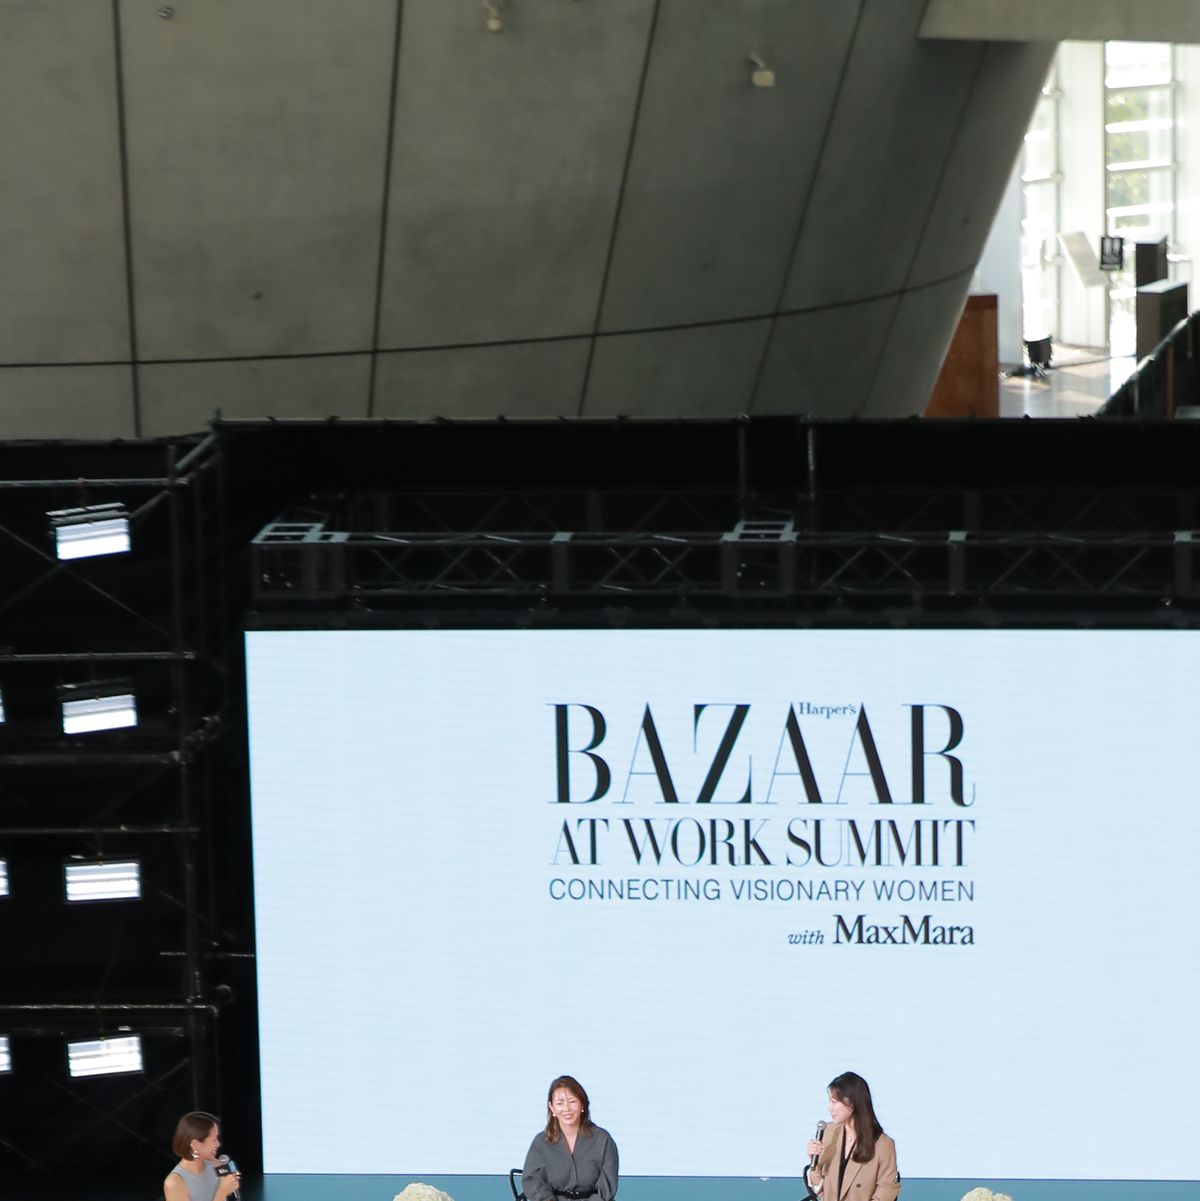 bazaar summit